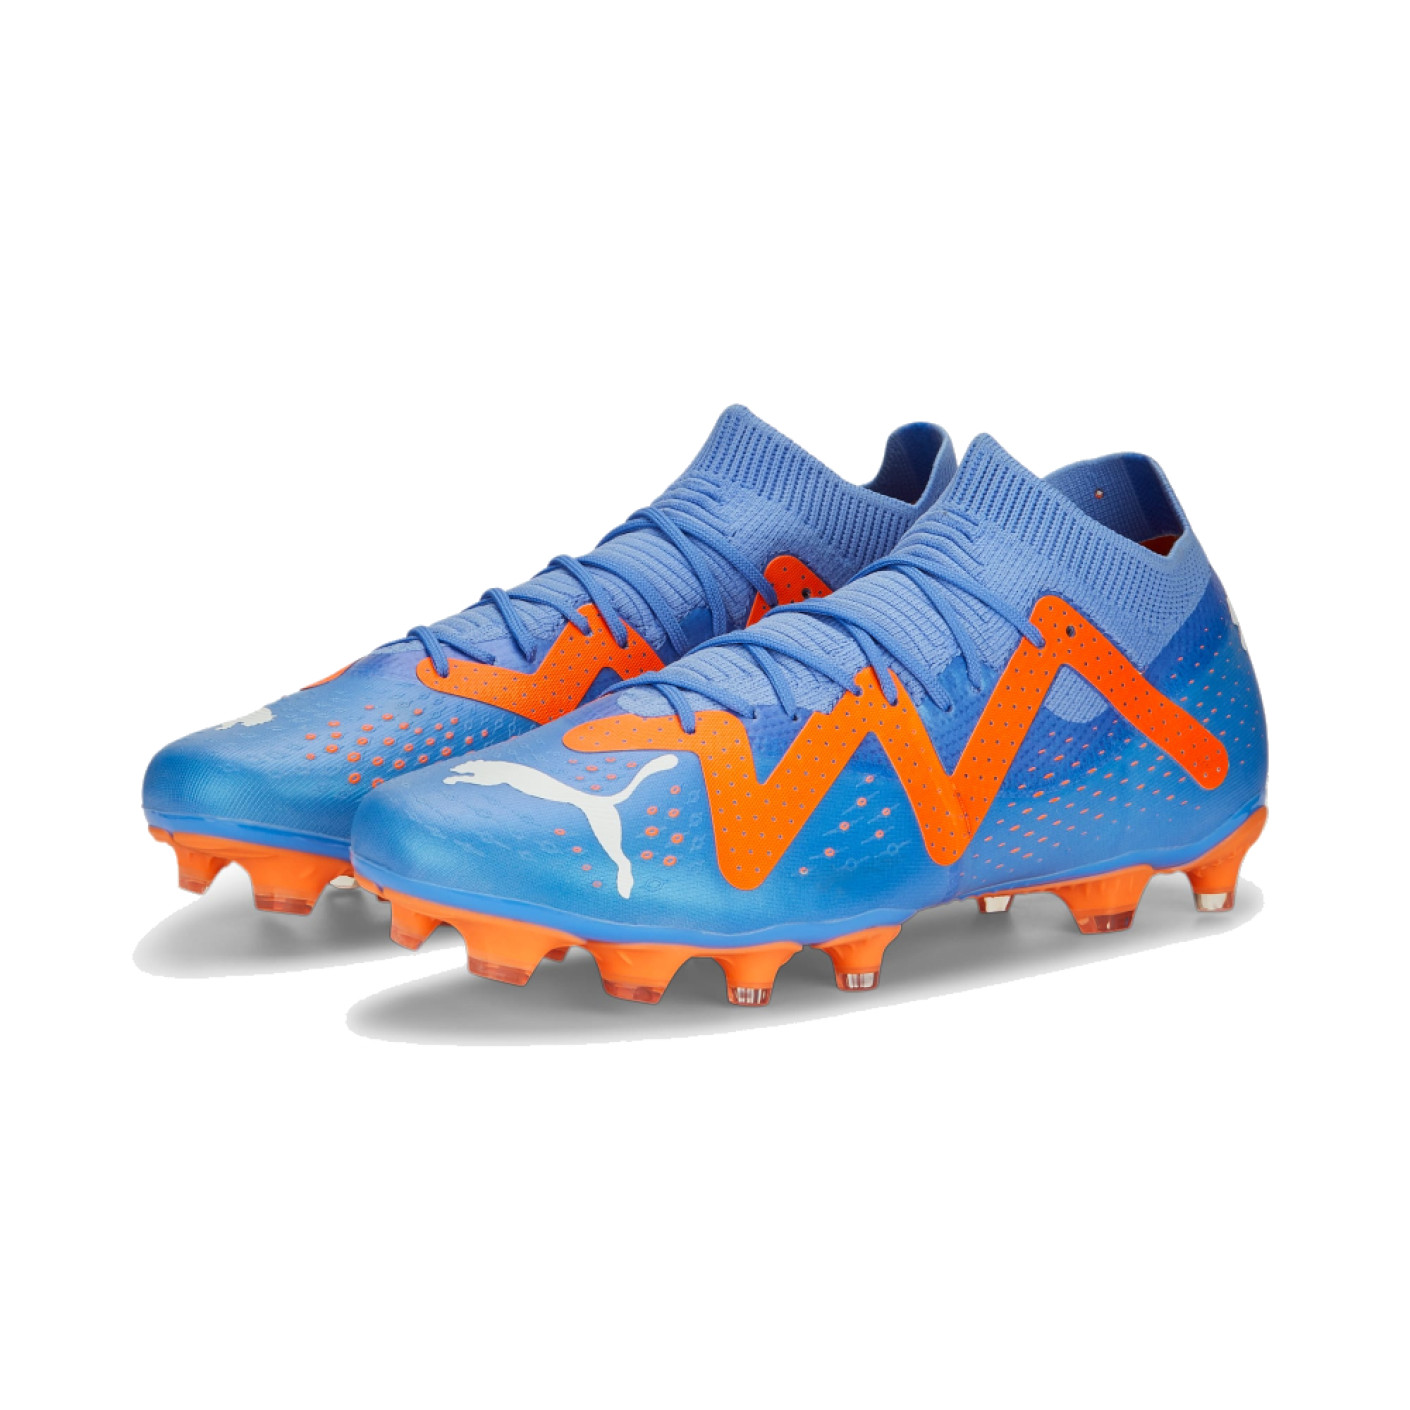 PUMA Future Match Gazon Naturel Gazon Artificiel Chaussures de Foot (MG) Bleu Orange Blanc